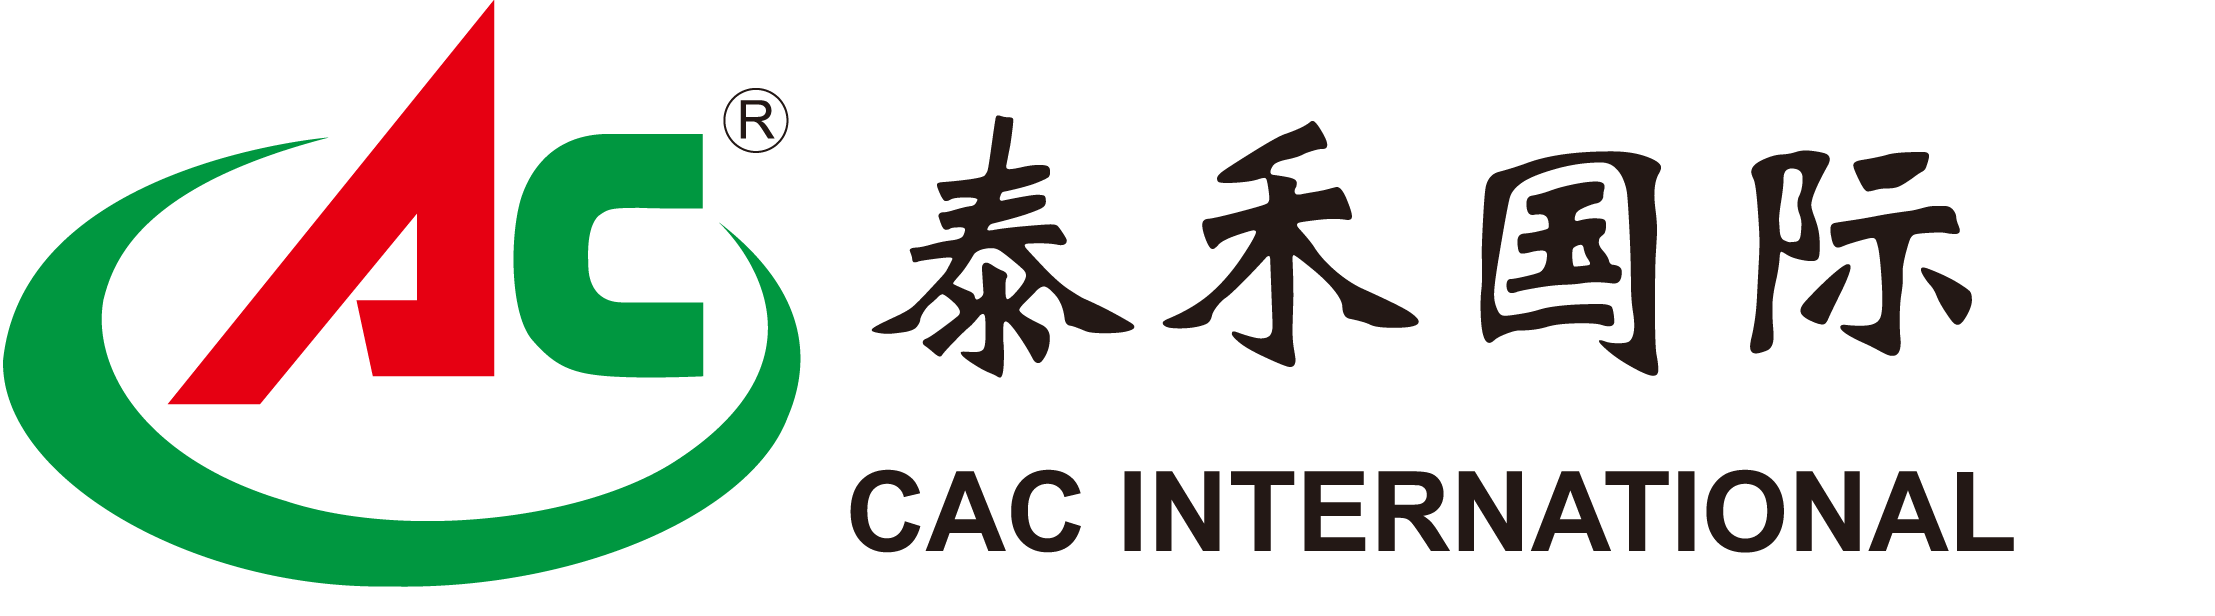 CAC Quality Management-Sustainability-南通泰禾化工股份有限公司